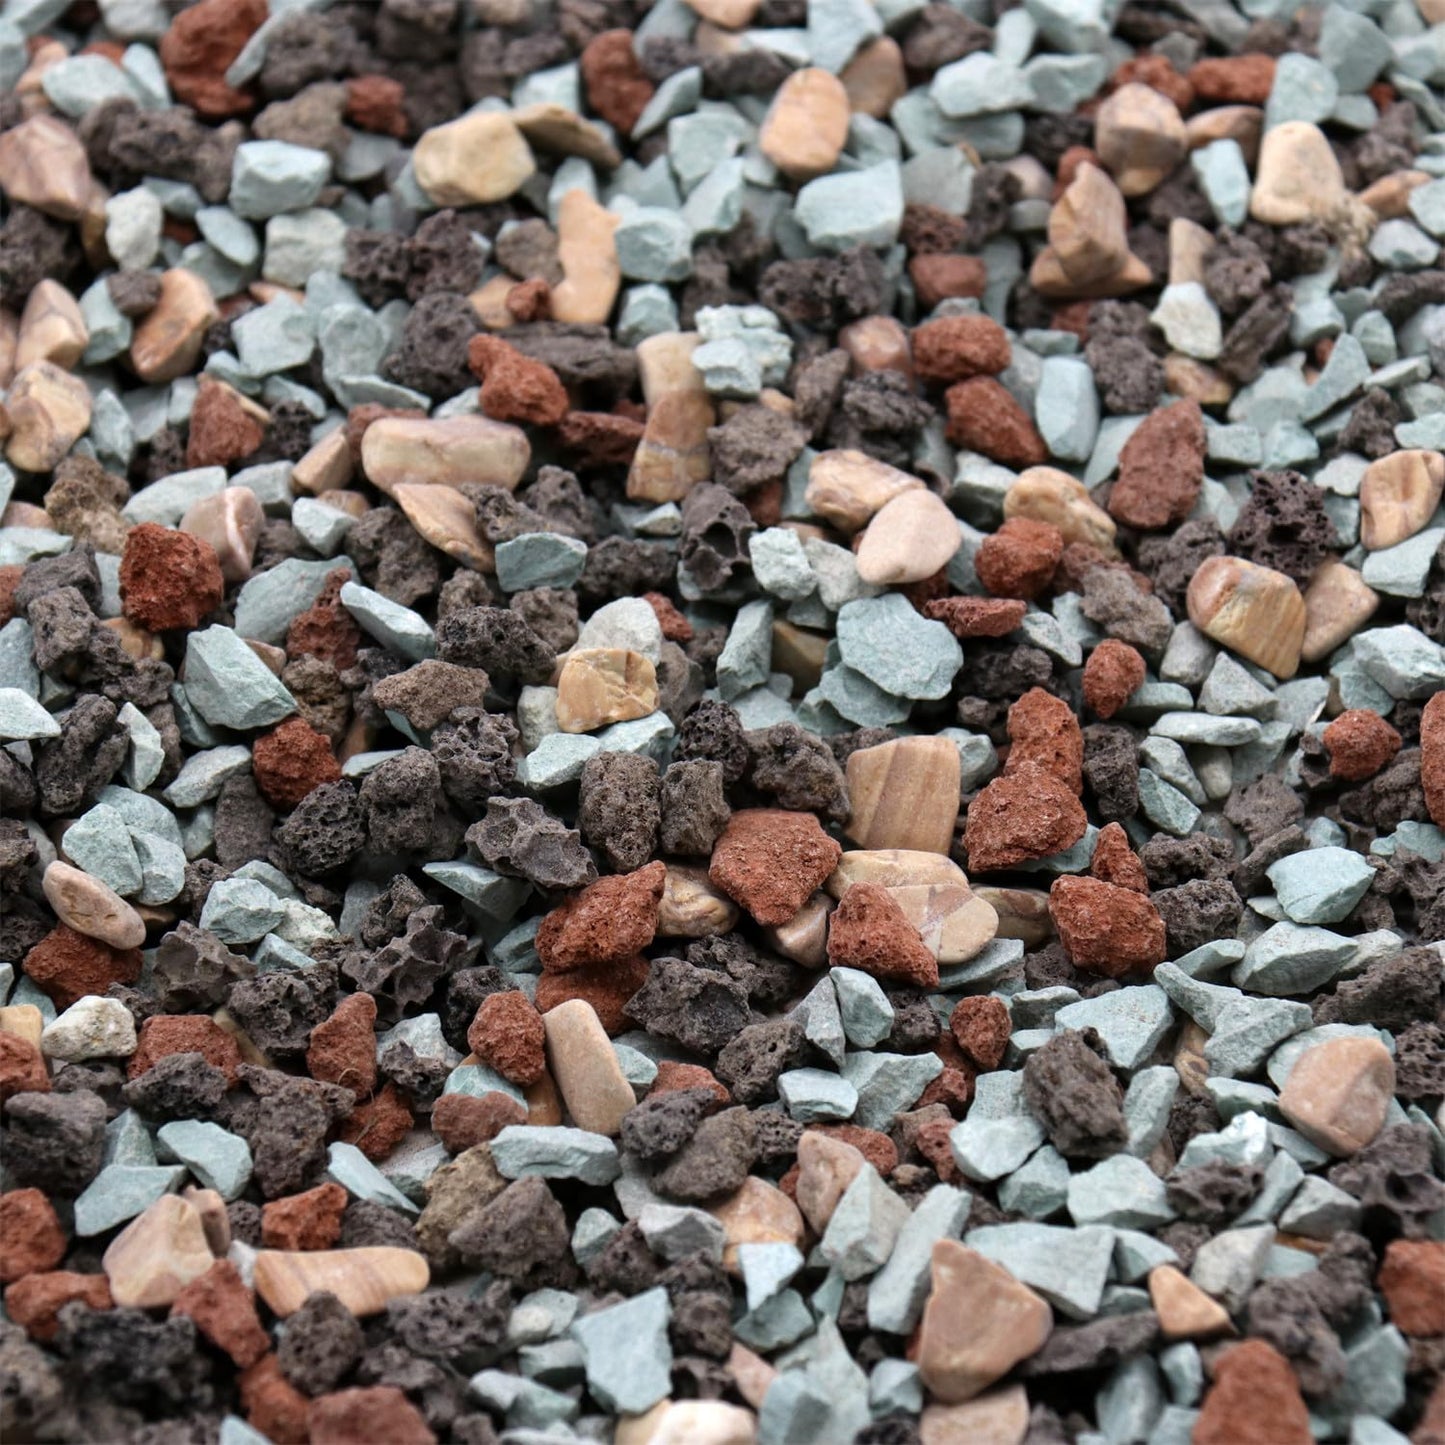 Premium Pebbles Volcanic Rock for Plants. Gritty Mix. Mixed Color Lava. 1/5 Inch - 10 lbs for Potting Soil, Succulents, Pots, Plants, Gardening (Mini (0.2 Inch), Horticultural - Bonsai Mix, 2)